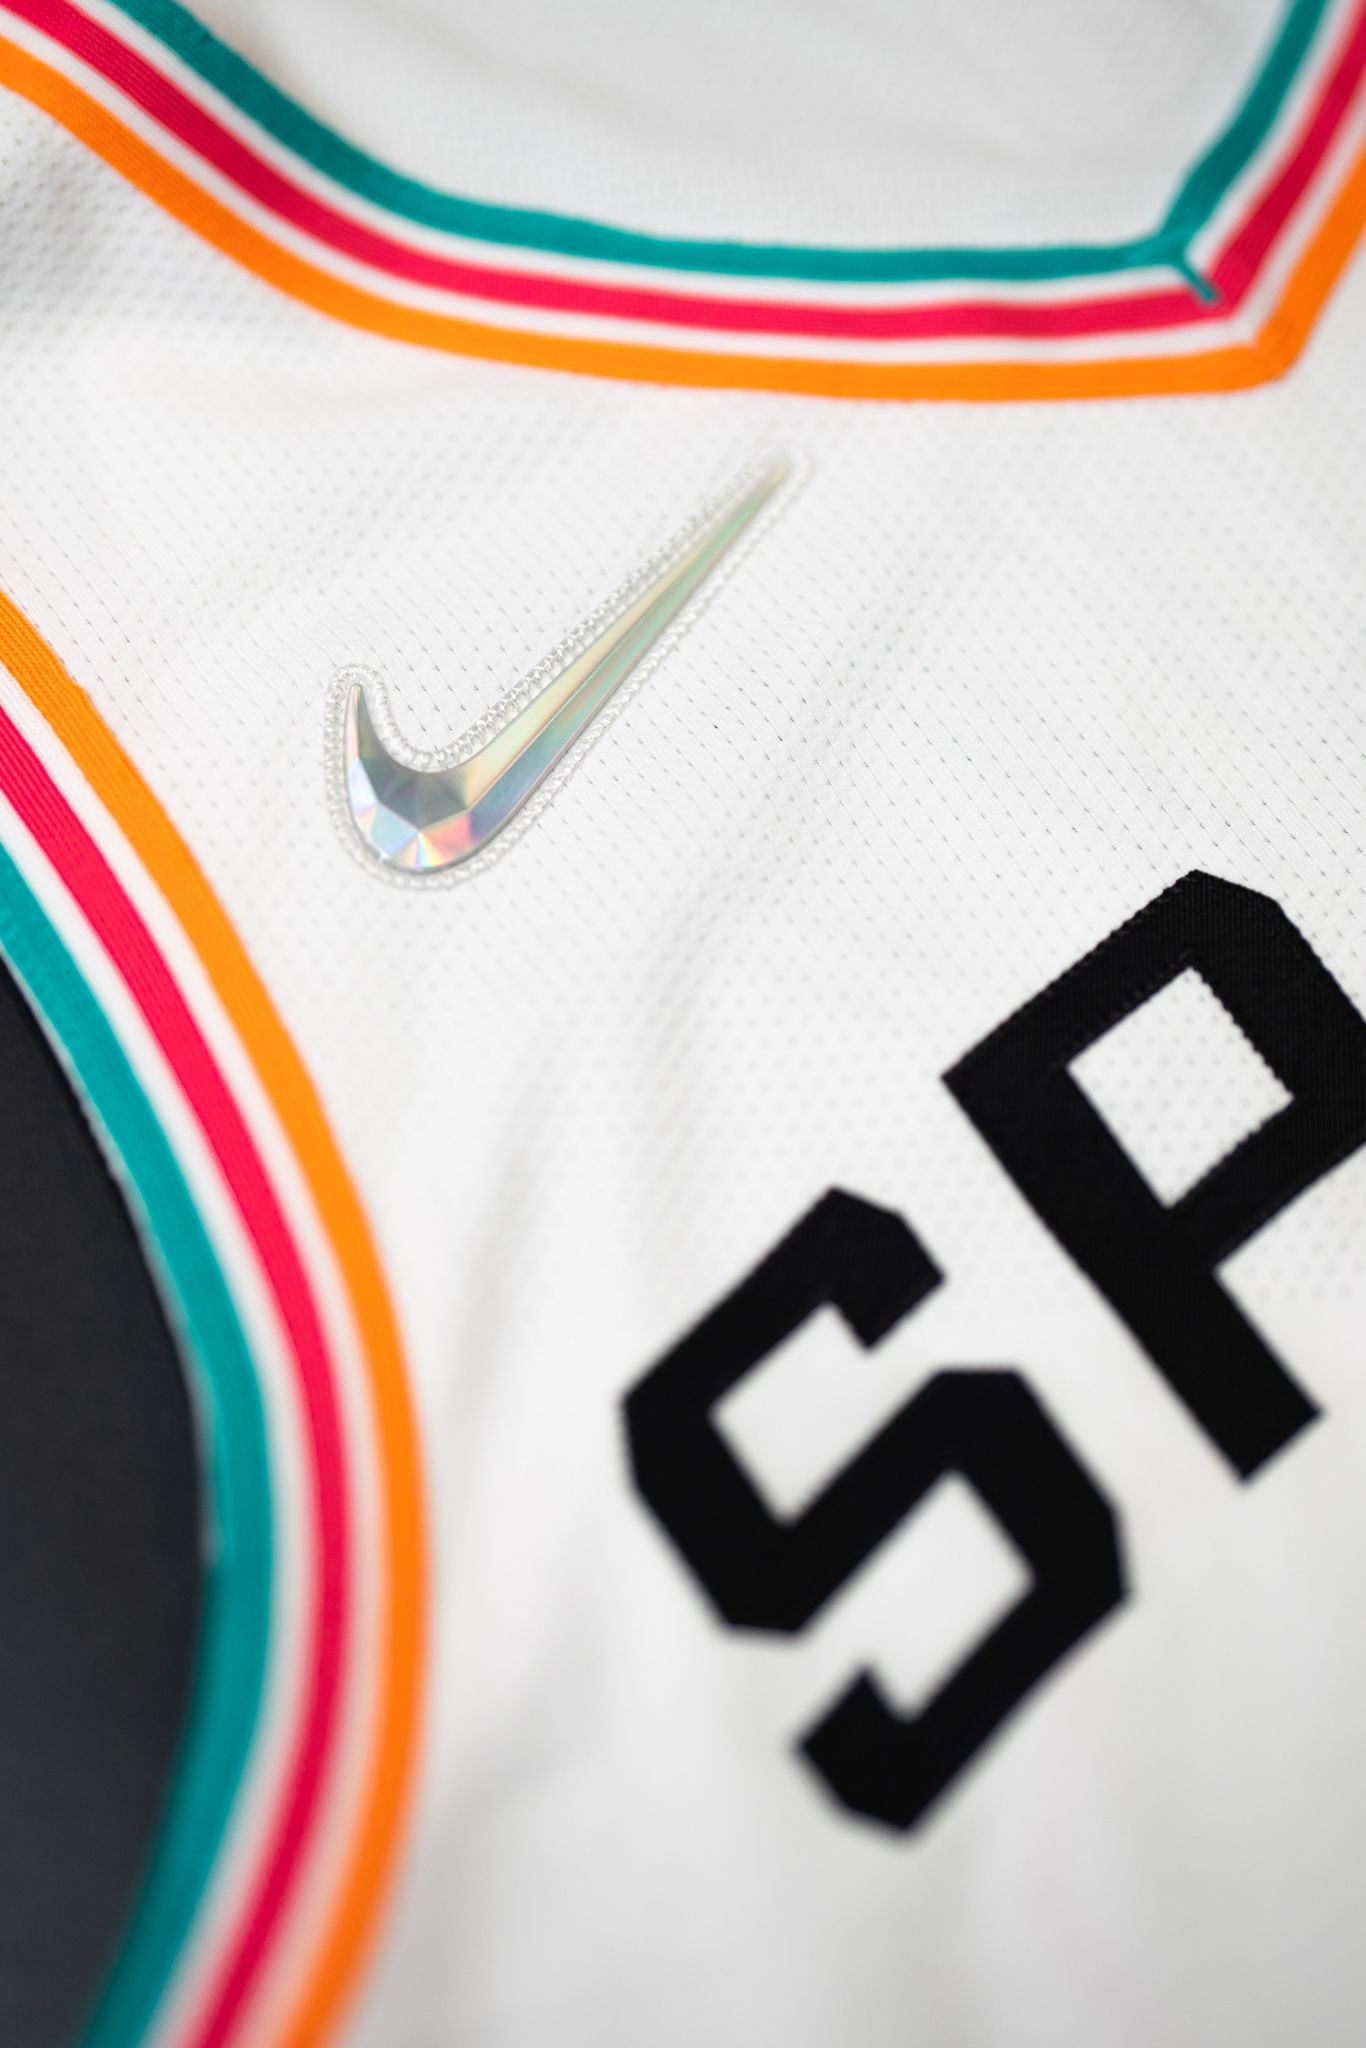 San Antonio Spurs reveal remixed Fiesta-themed jerseys for this season